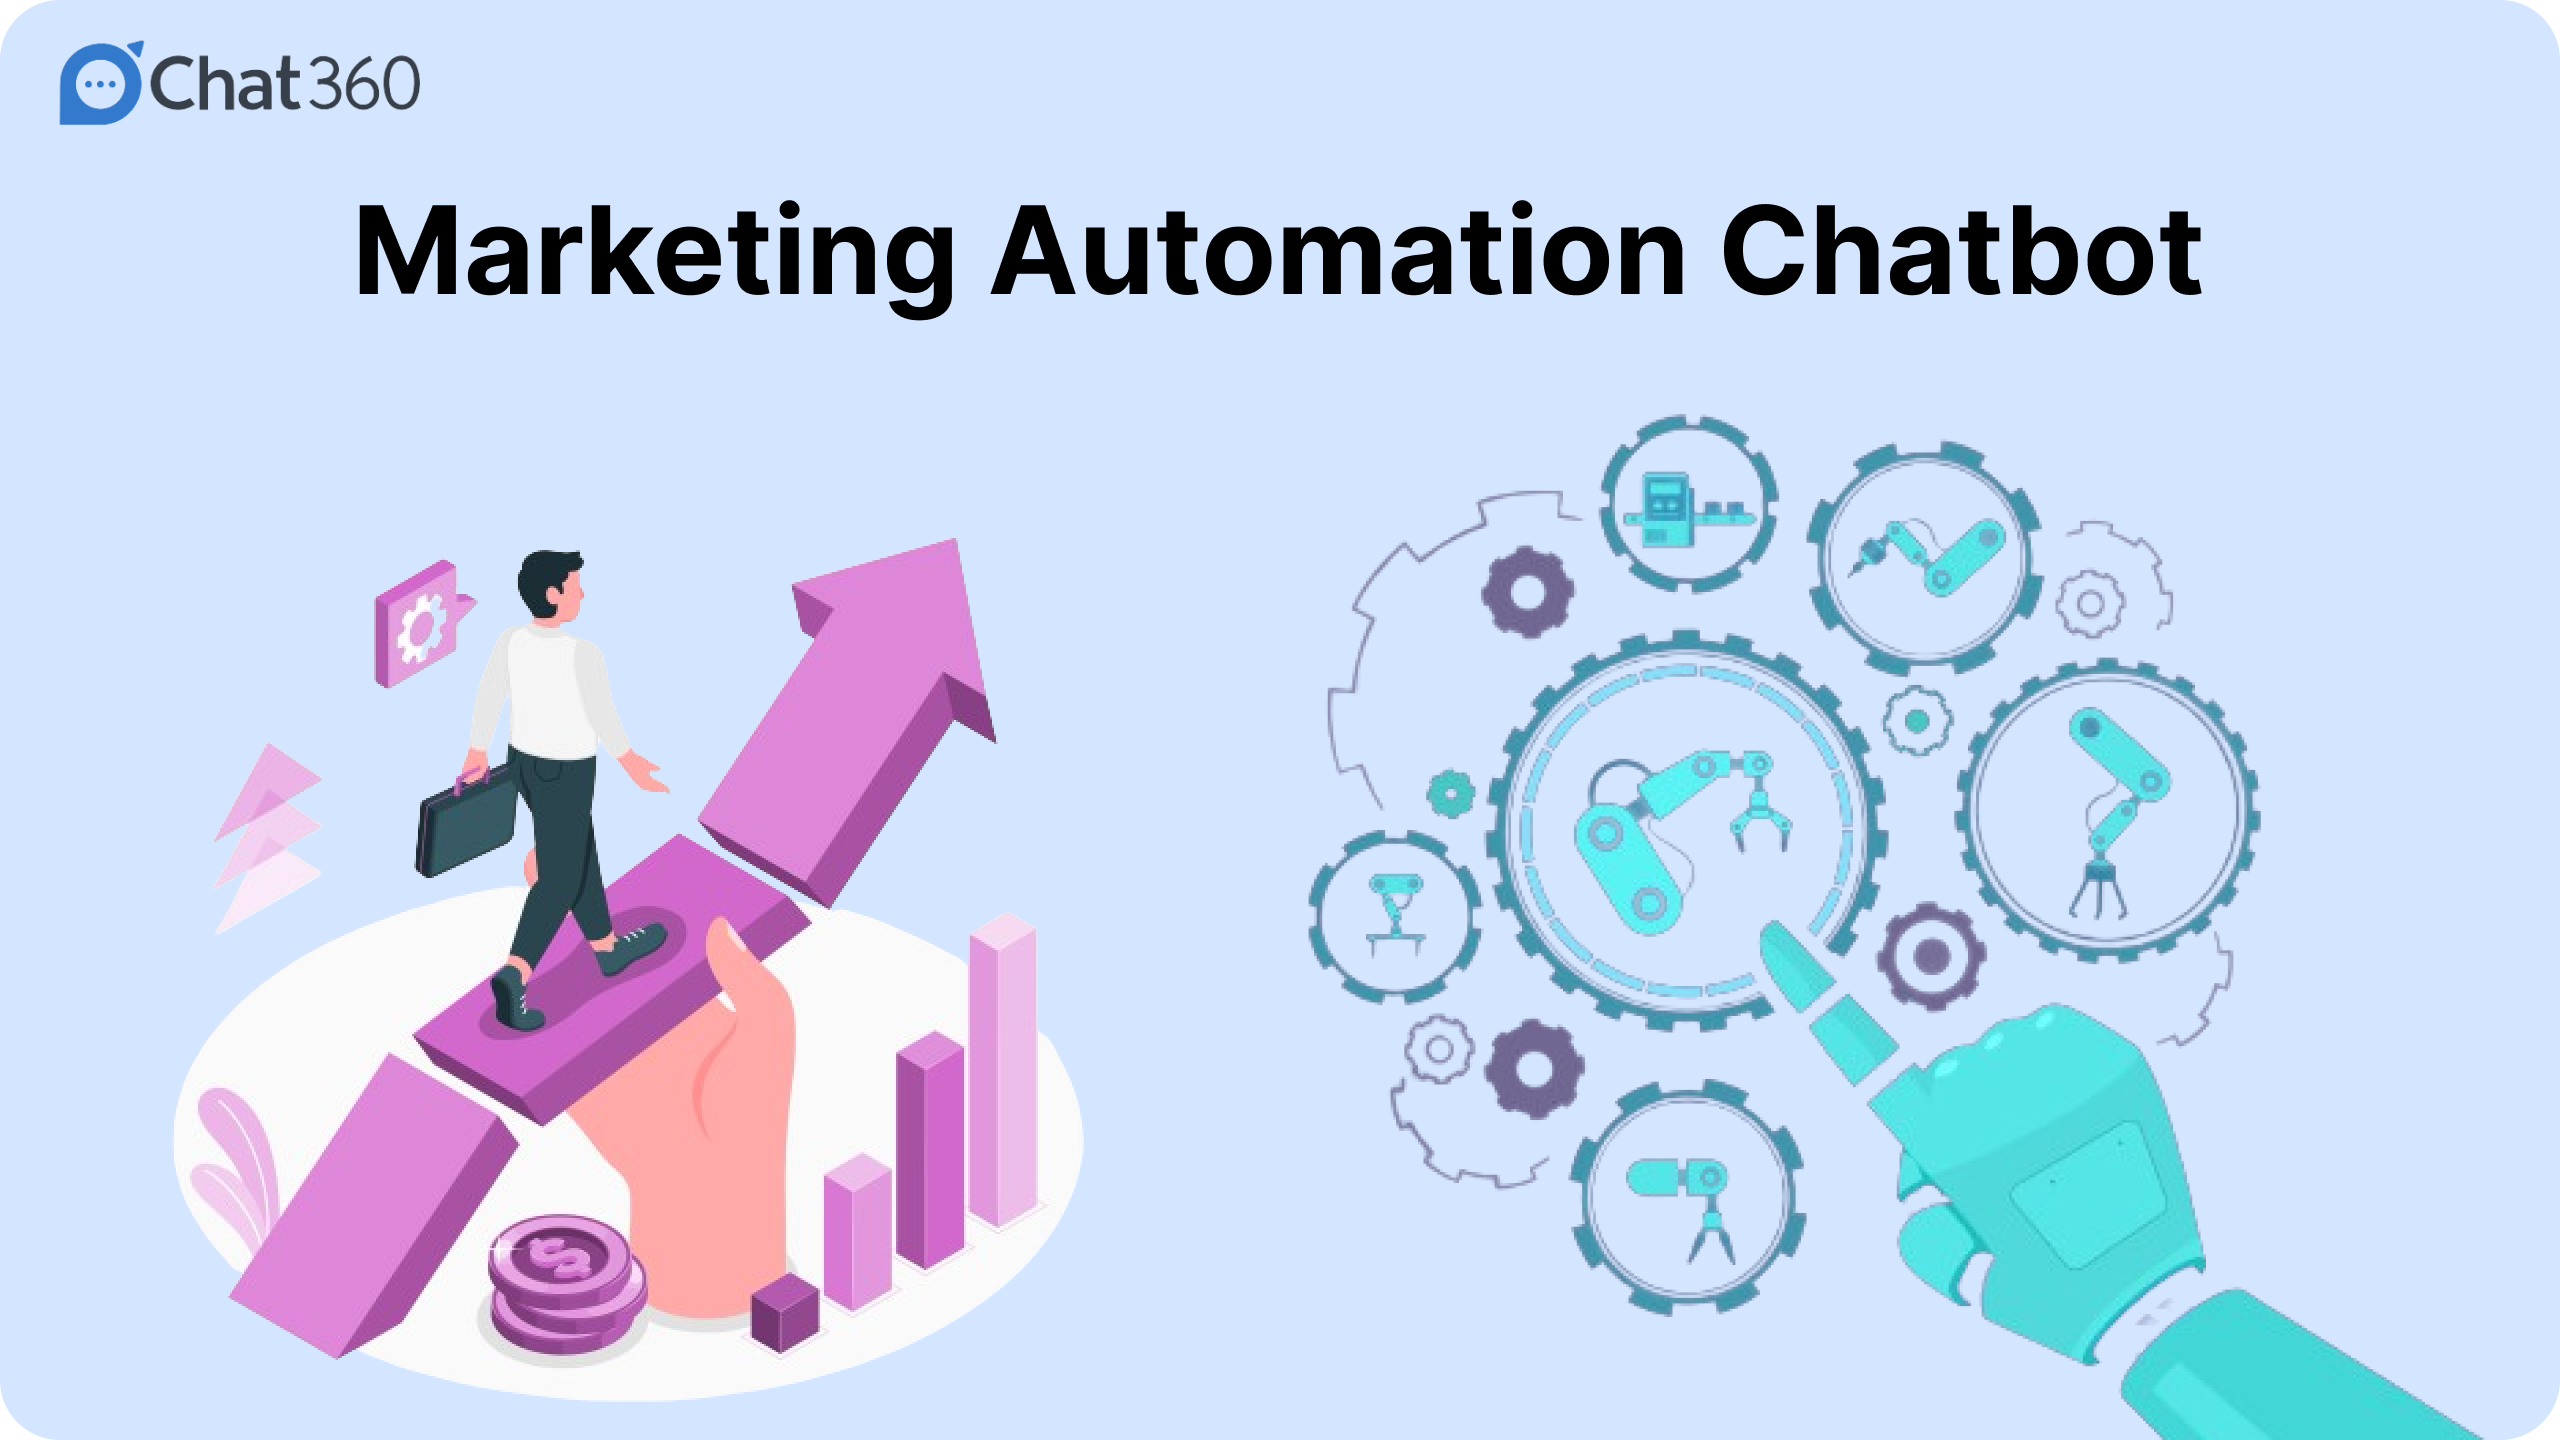 Marketing automation using chatbots